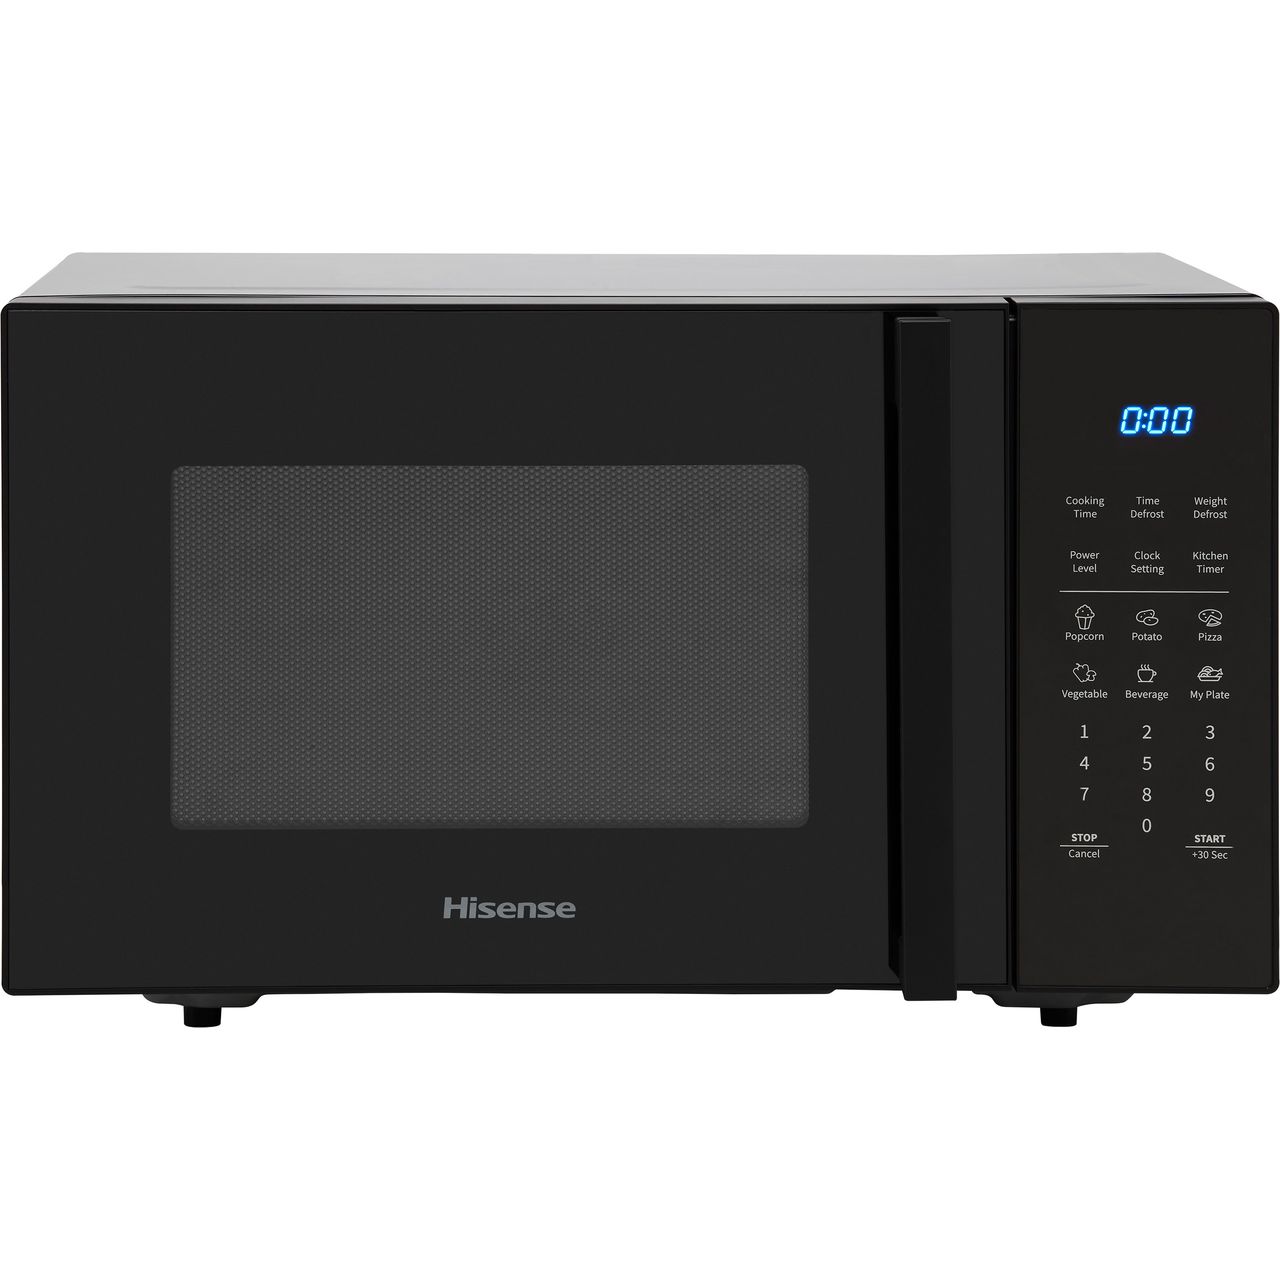 Hisense Microwave Oven | Black | H25MOBS7HUK_BK | ao.com